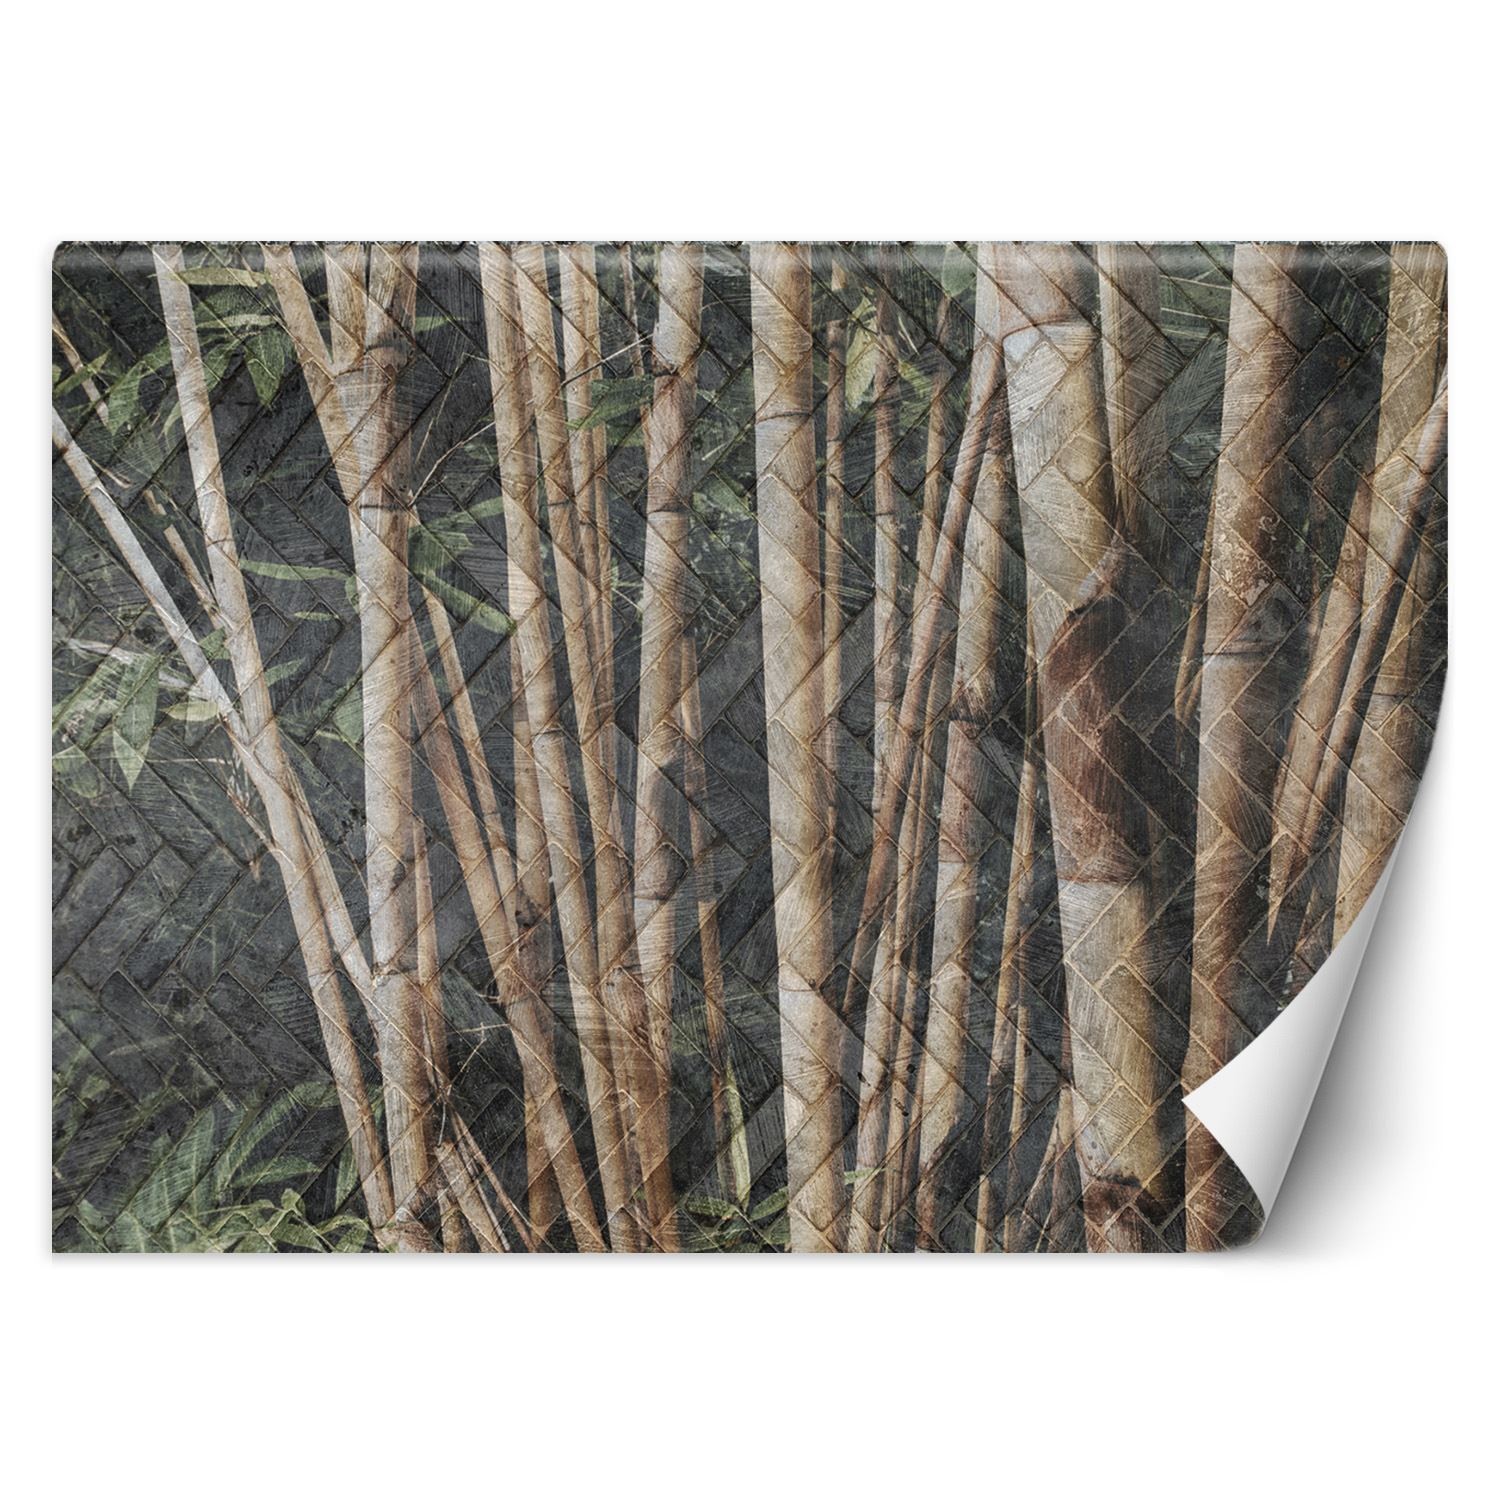 Trend24 – Behang – Bamboo Forest – Behangpapier – Behang Woonkamer – Fotobehang – 400x280x2 cm – Incl. behanglijm